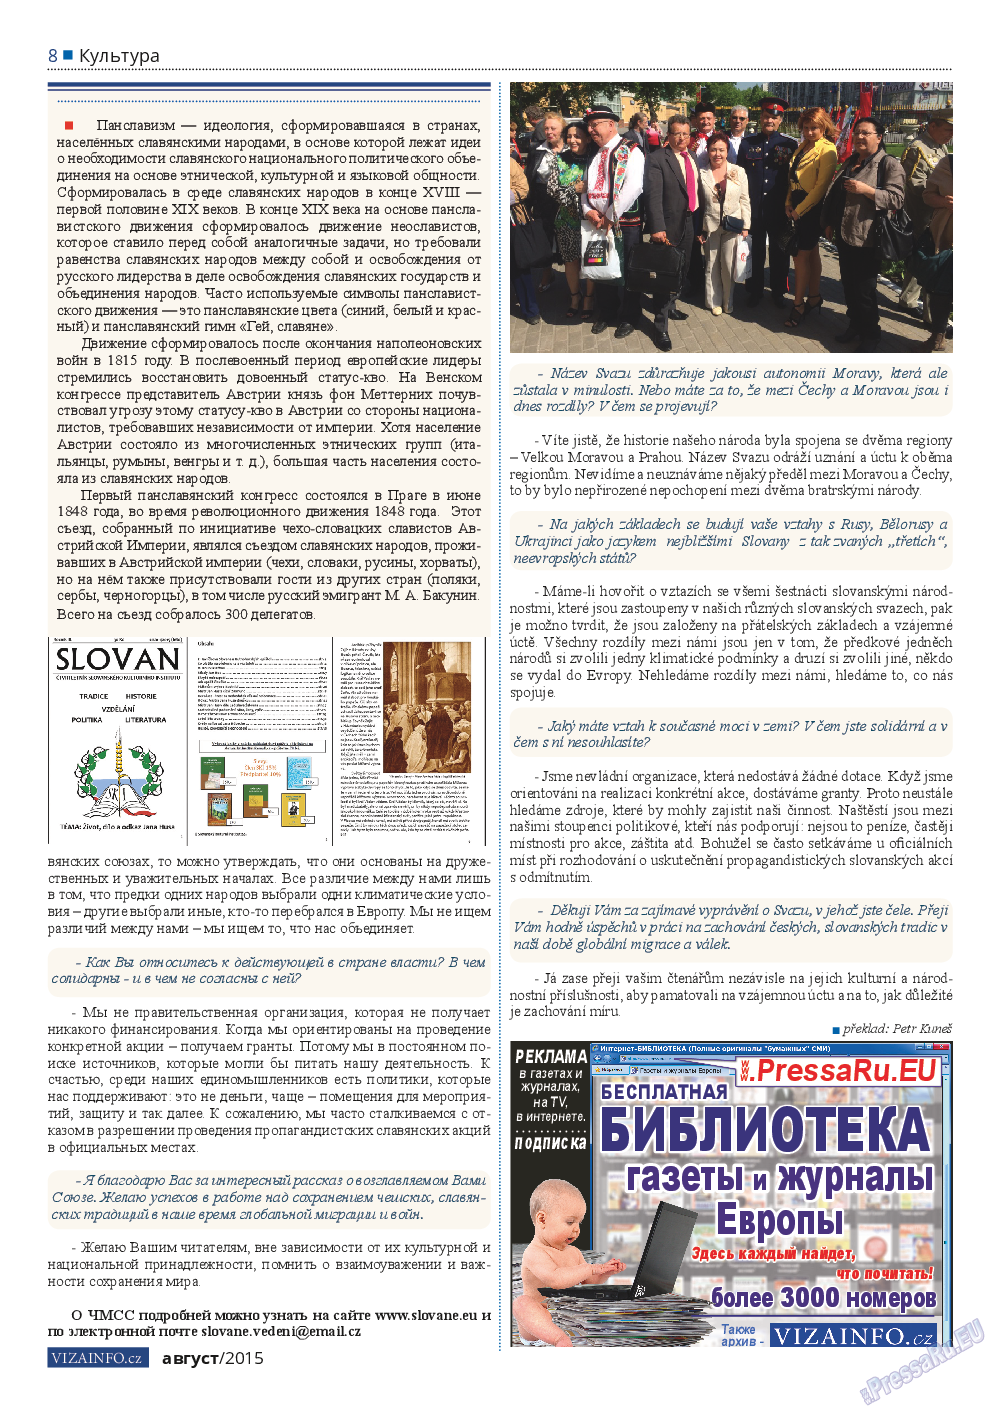 Vizainfo.cz, газета. 2015 №71 стр.8